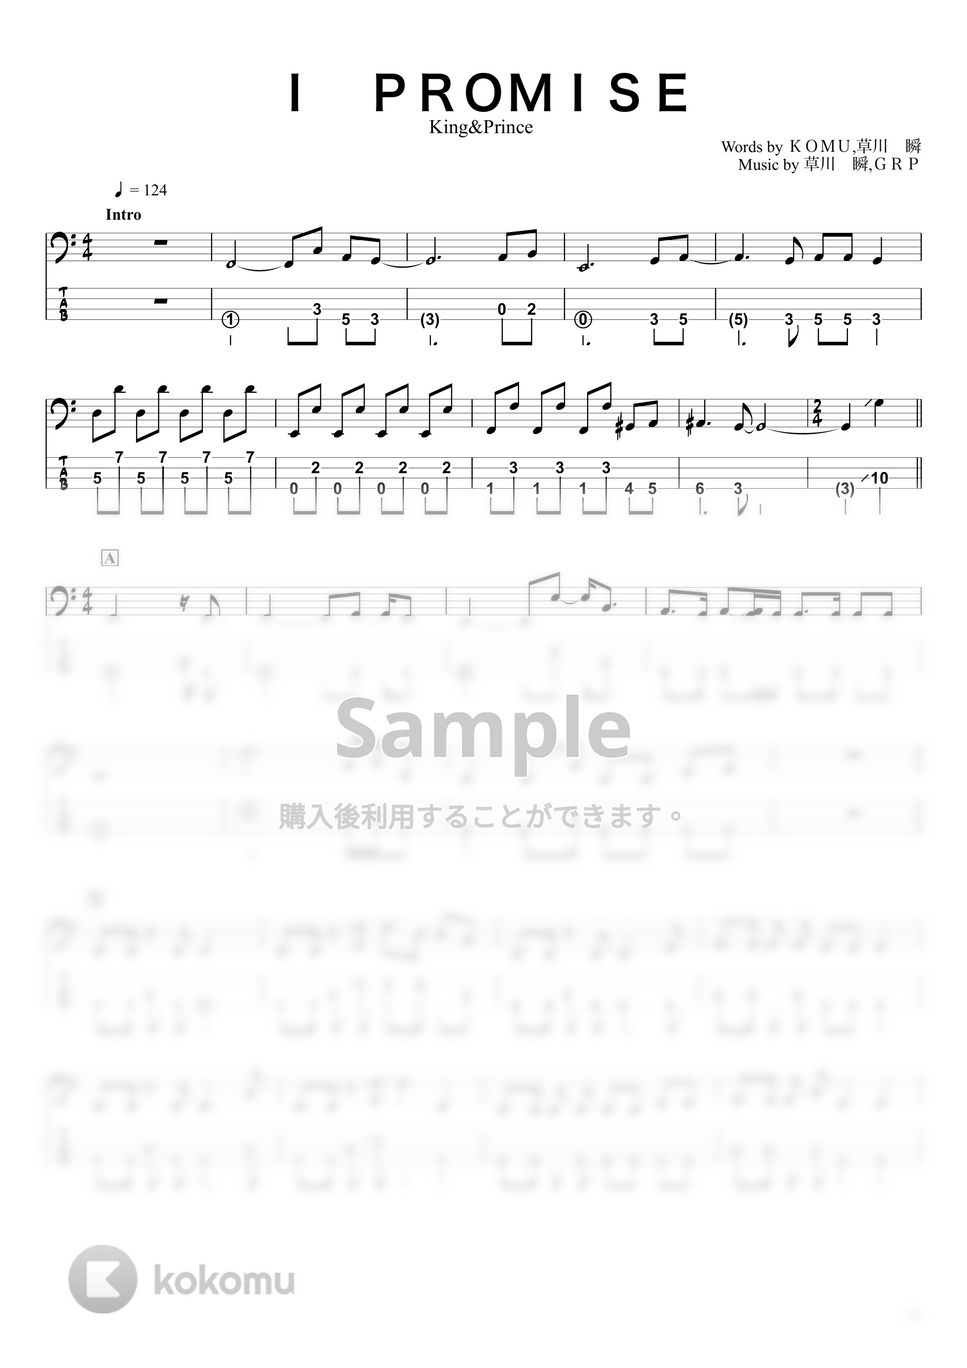 King&Prince - I PROMISE (『ベースTAB譜』☆4弦ベース対応) by swbass